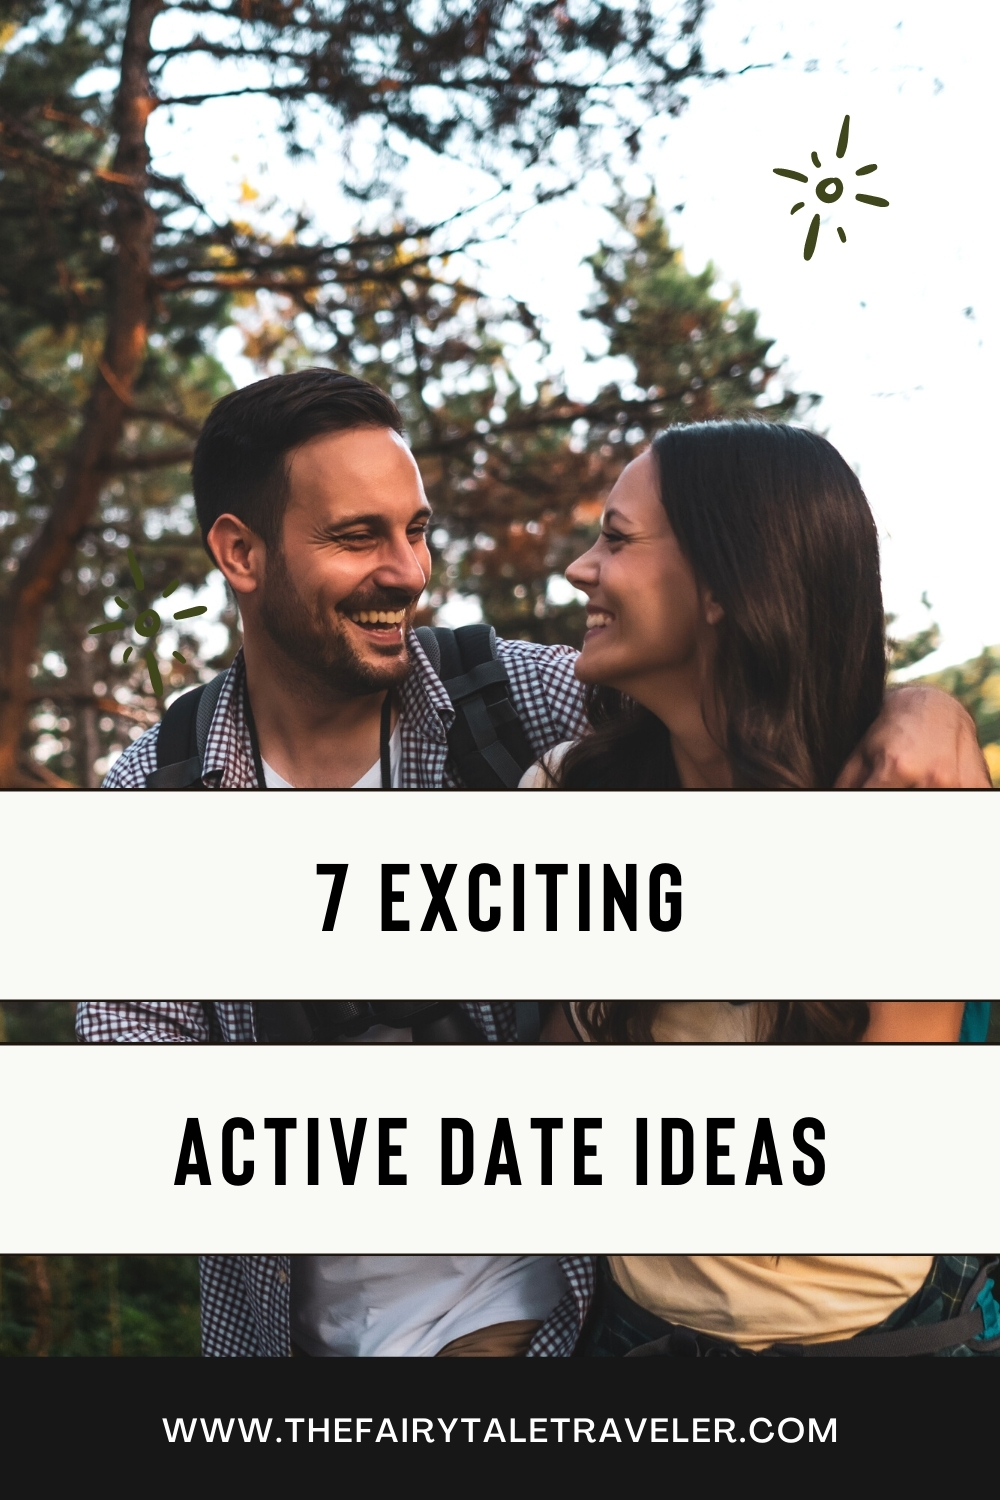 Active Date Ideas